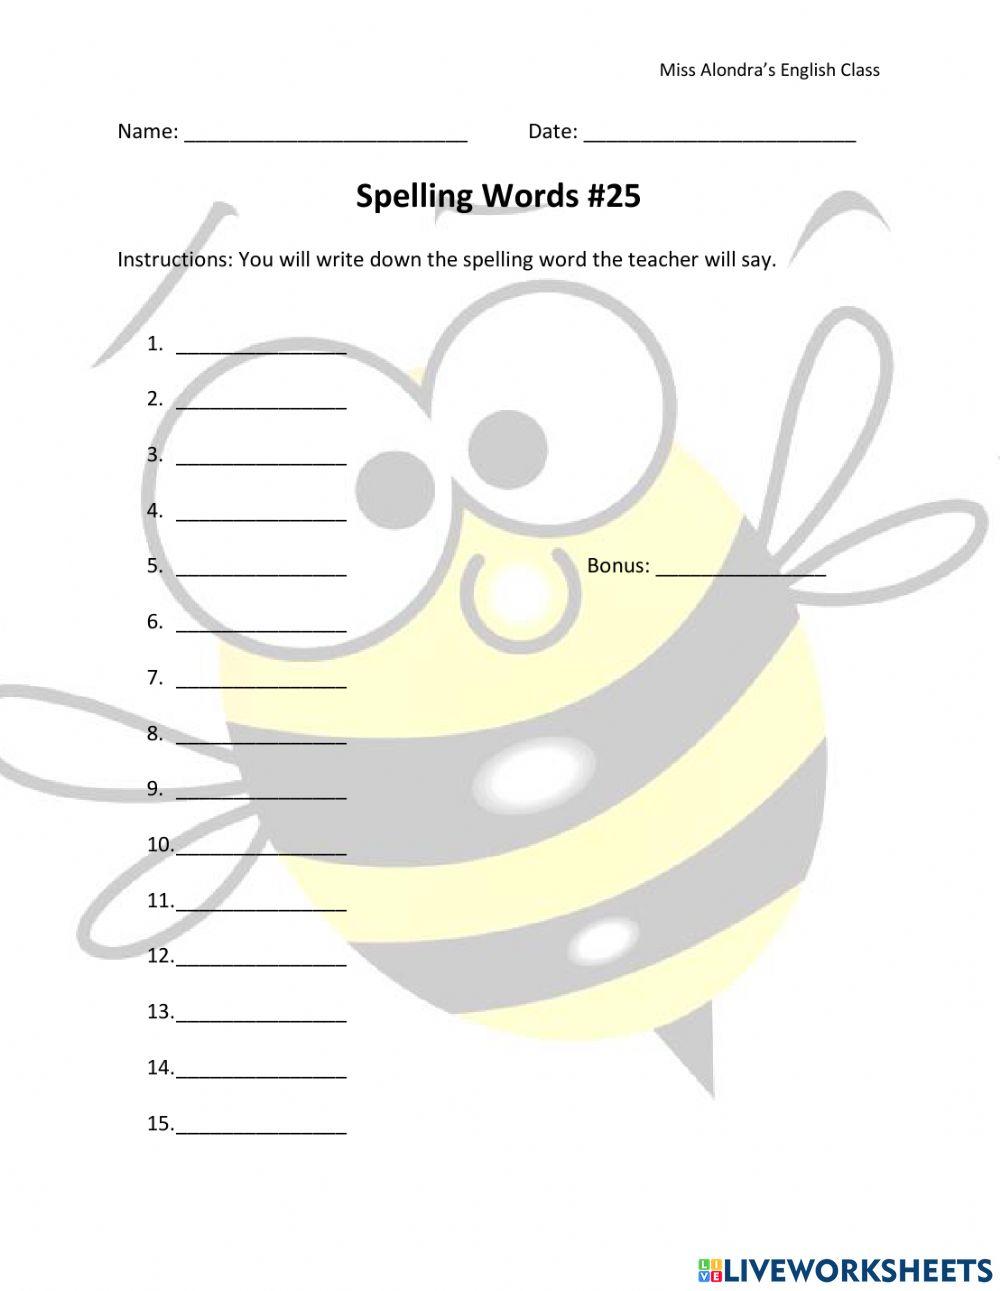 Spelling Exam -25